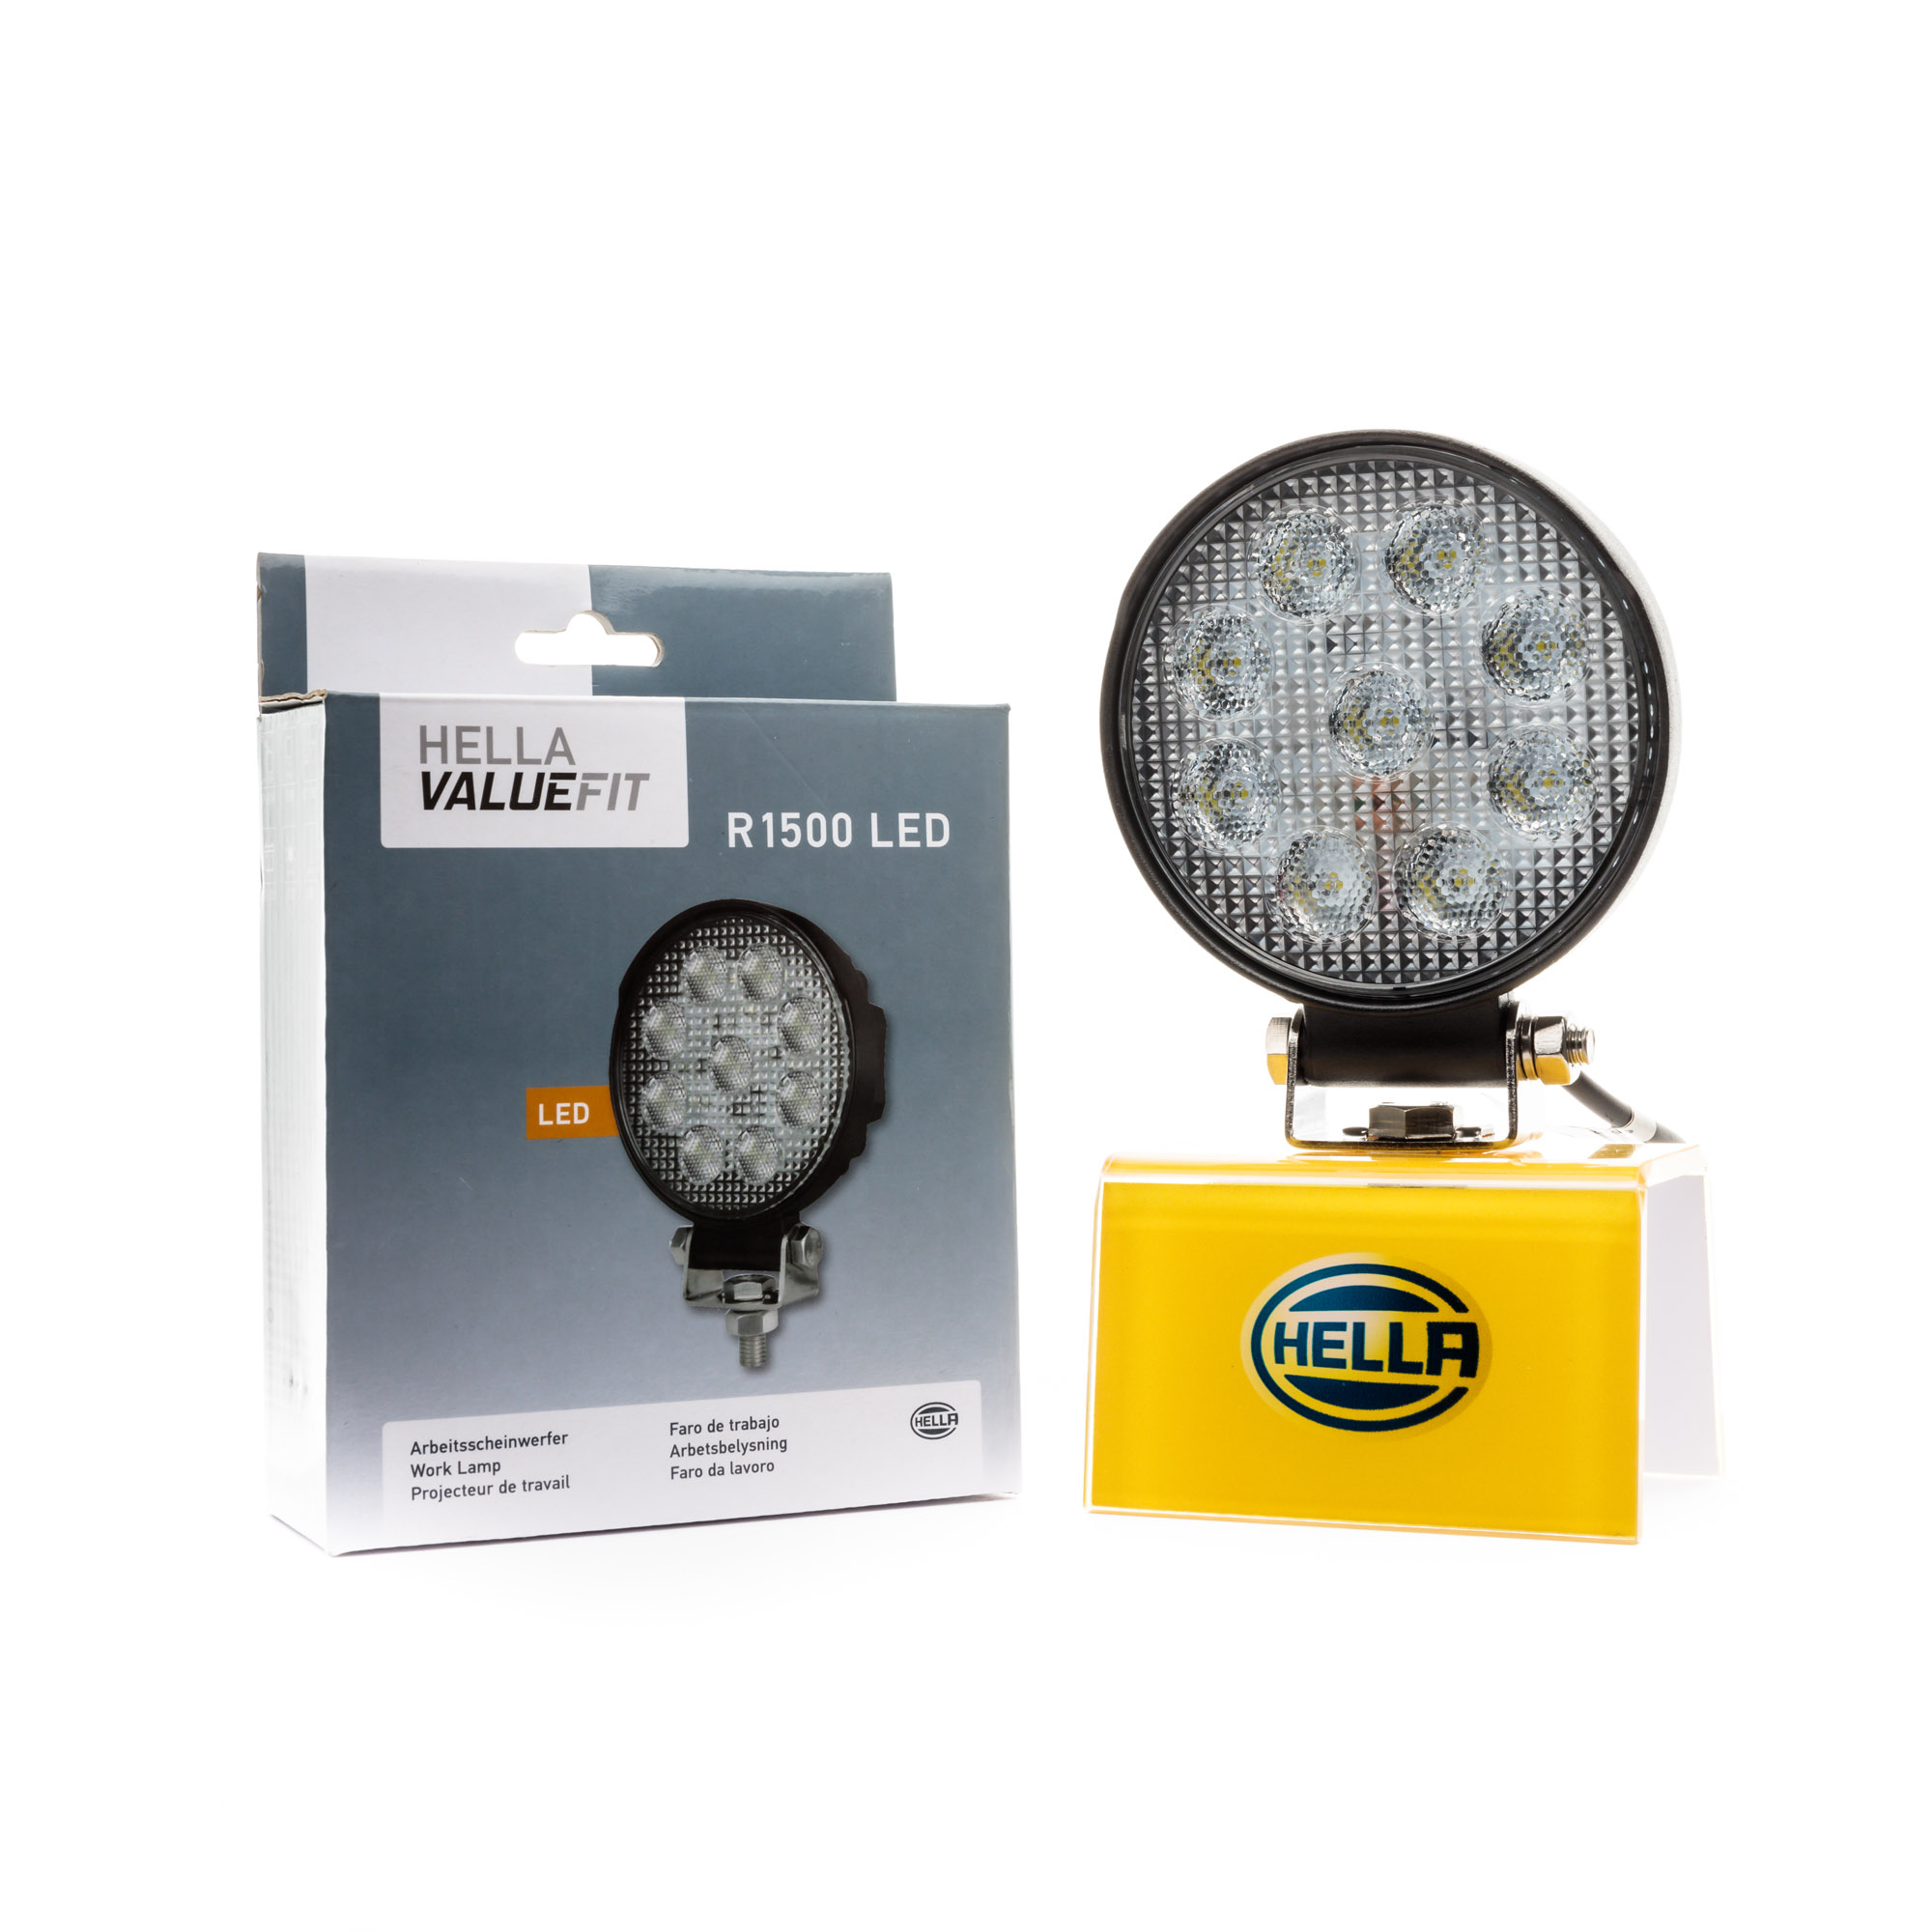 HELLA Valuefit R1500 LED Work Light - 1G0 357 101 012